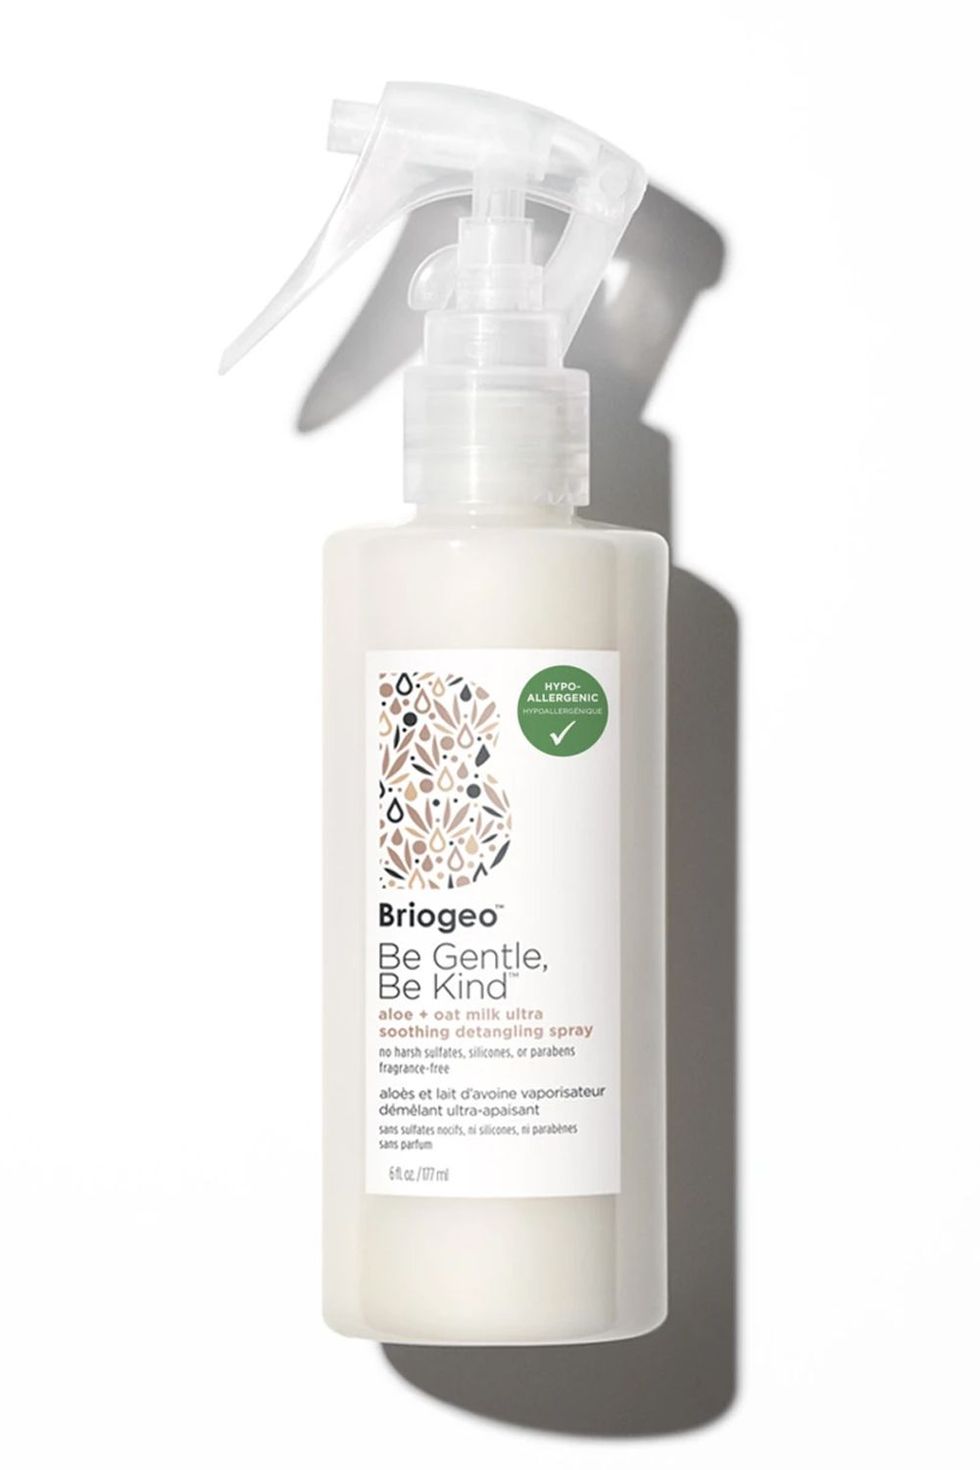 Briogeo Be Gentle, Be Kind Aloe + Oat Milk Ultra Soothing Detangling Spray